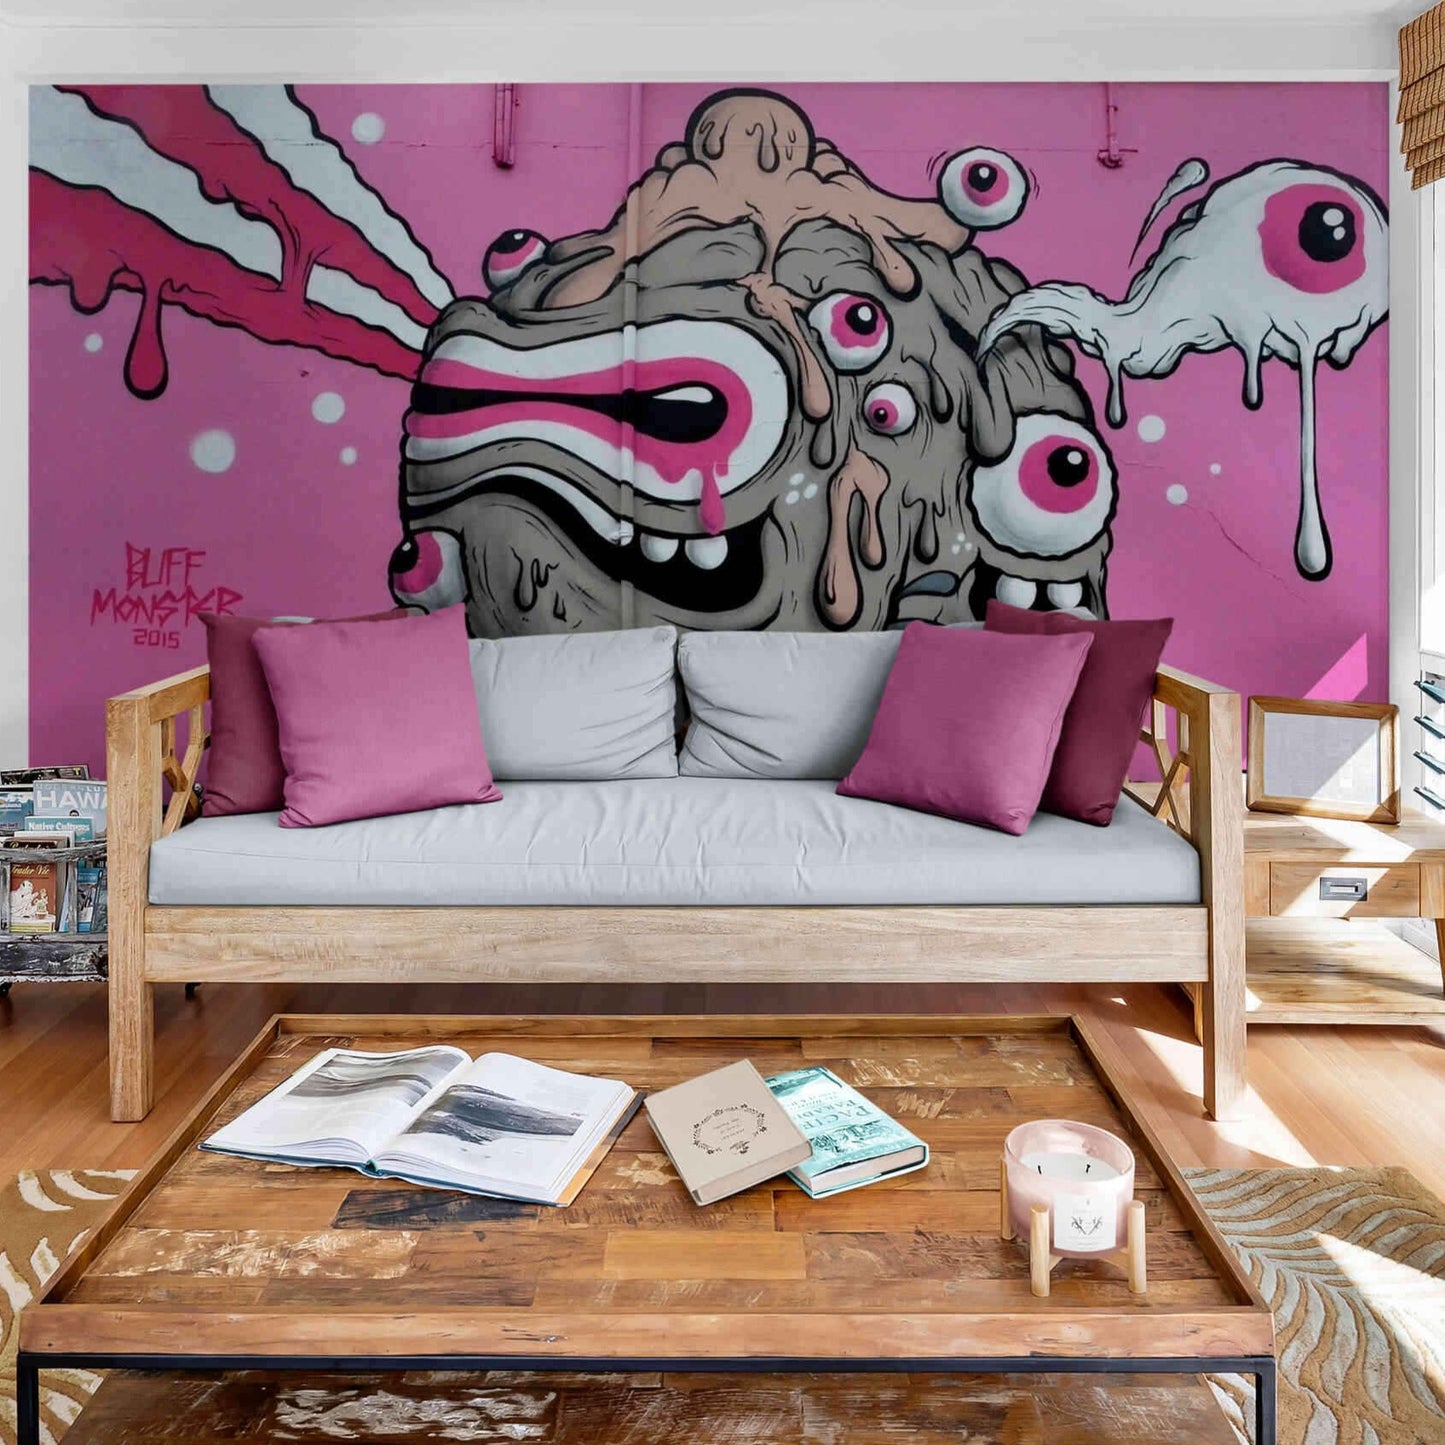 Empowering messages in pink street art graffiti, inspiring creativity in a girl's bedroom mural.